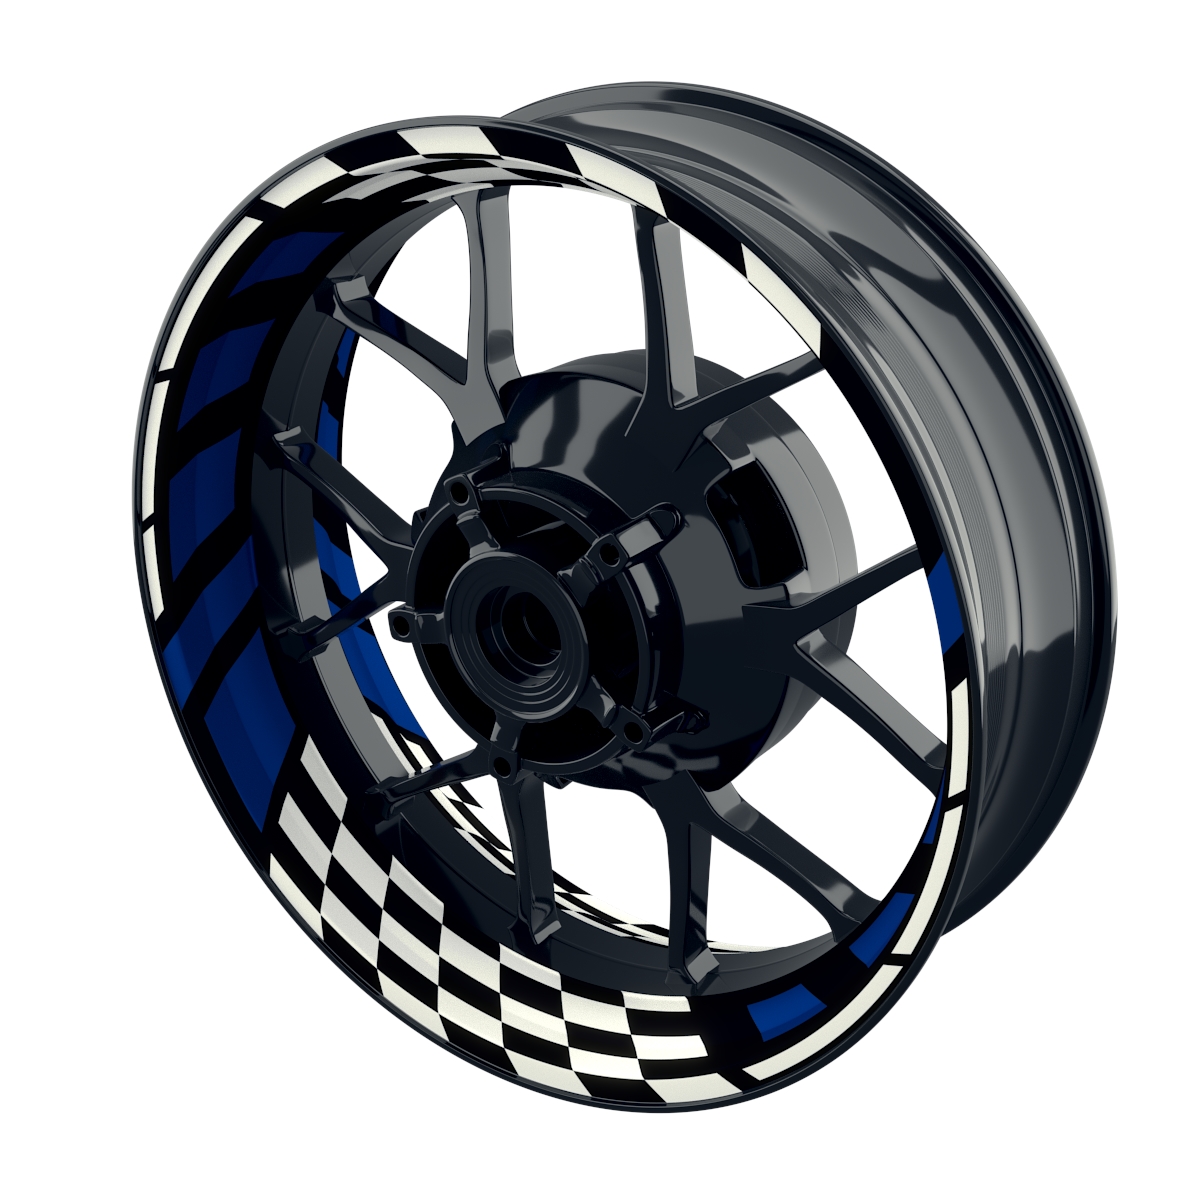 RACE black Rim Decals  Wheelsticker Premium